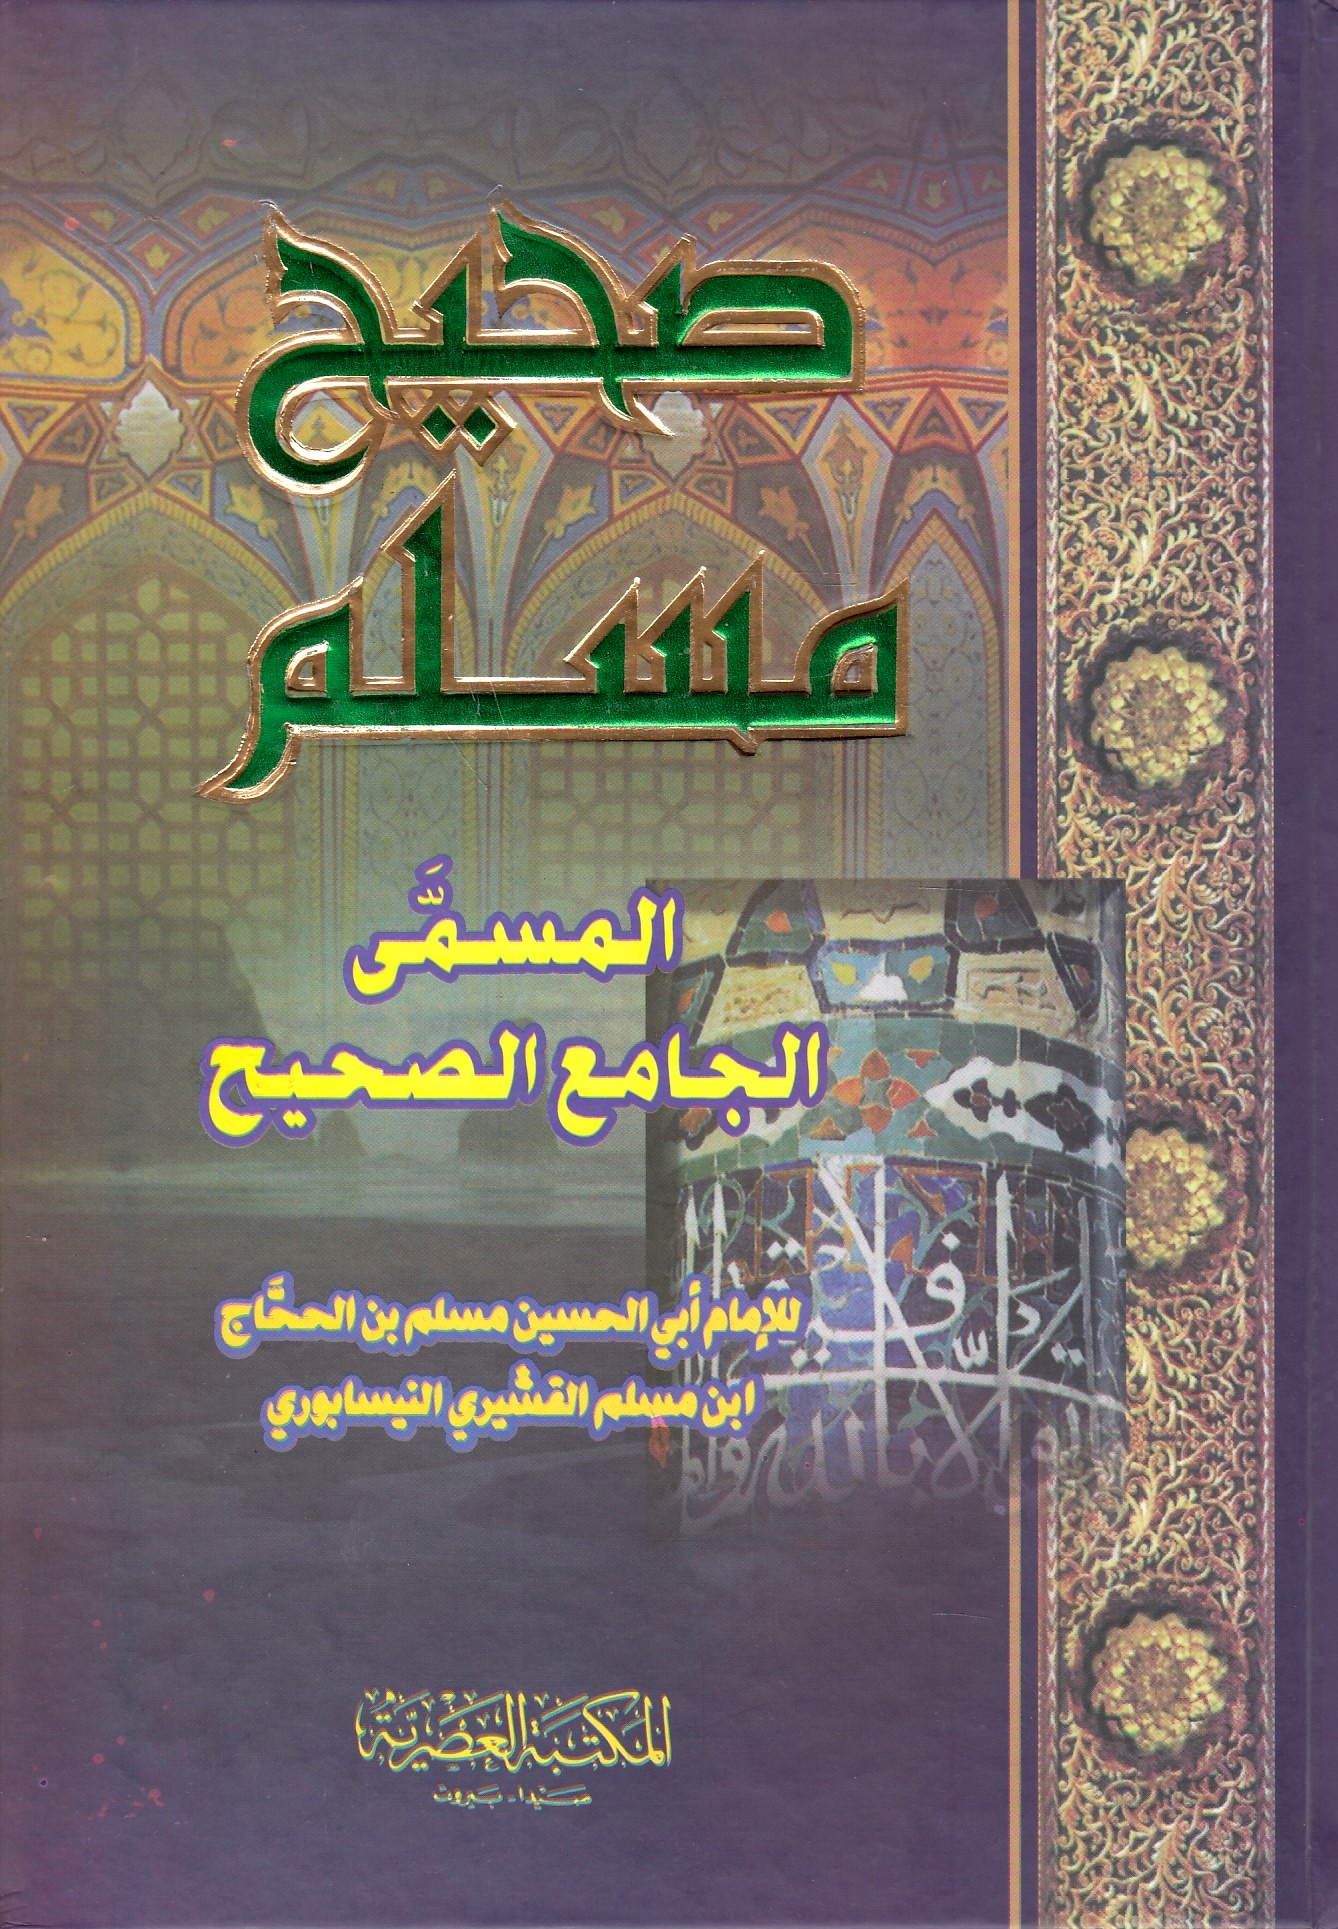 Sahih Muslim, al-musamma al-Jami' al-Sahih.   (One volume ed.)